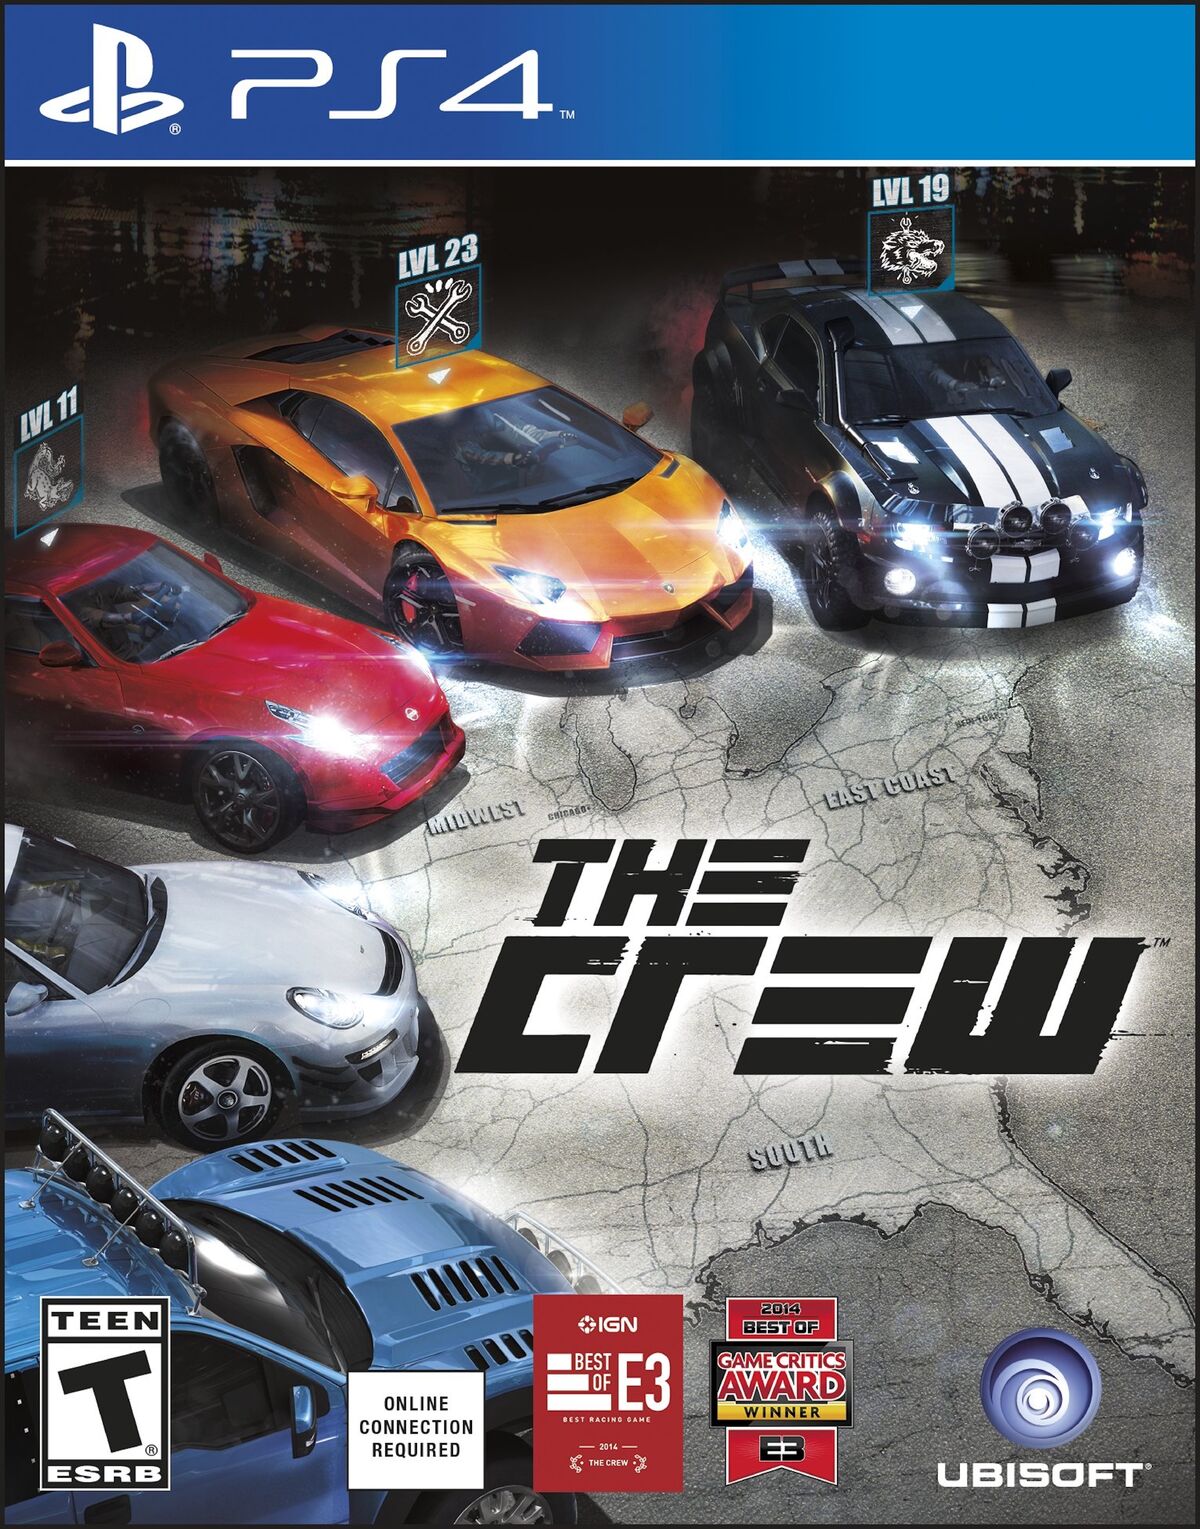 Mediakwest - SolidAnim races with Ubisoft game The Crew